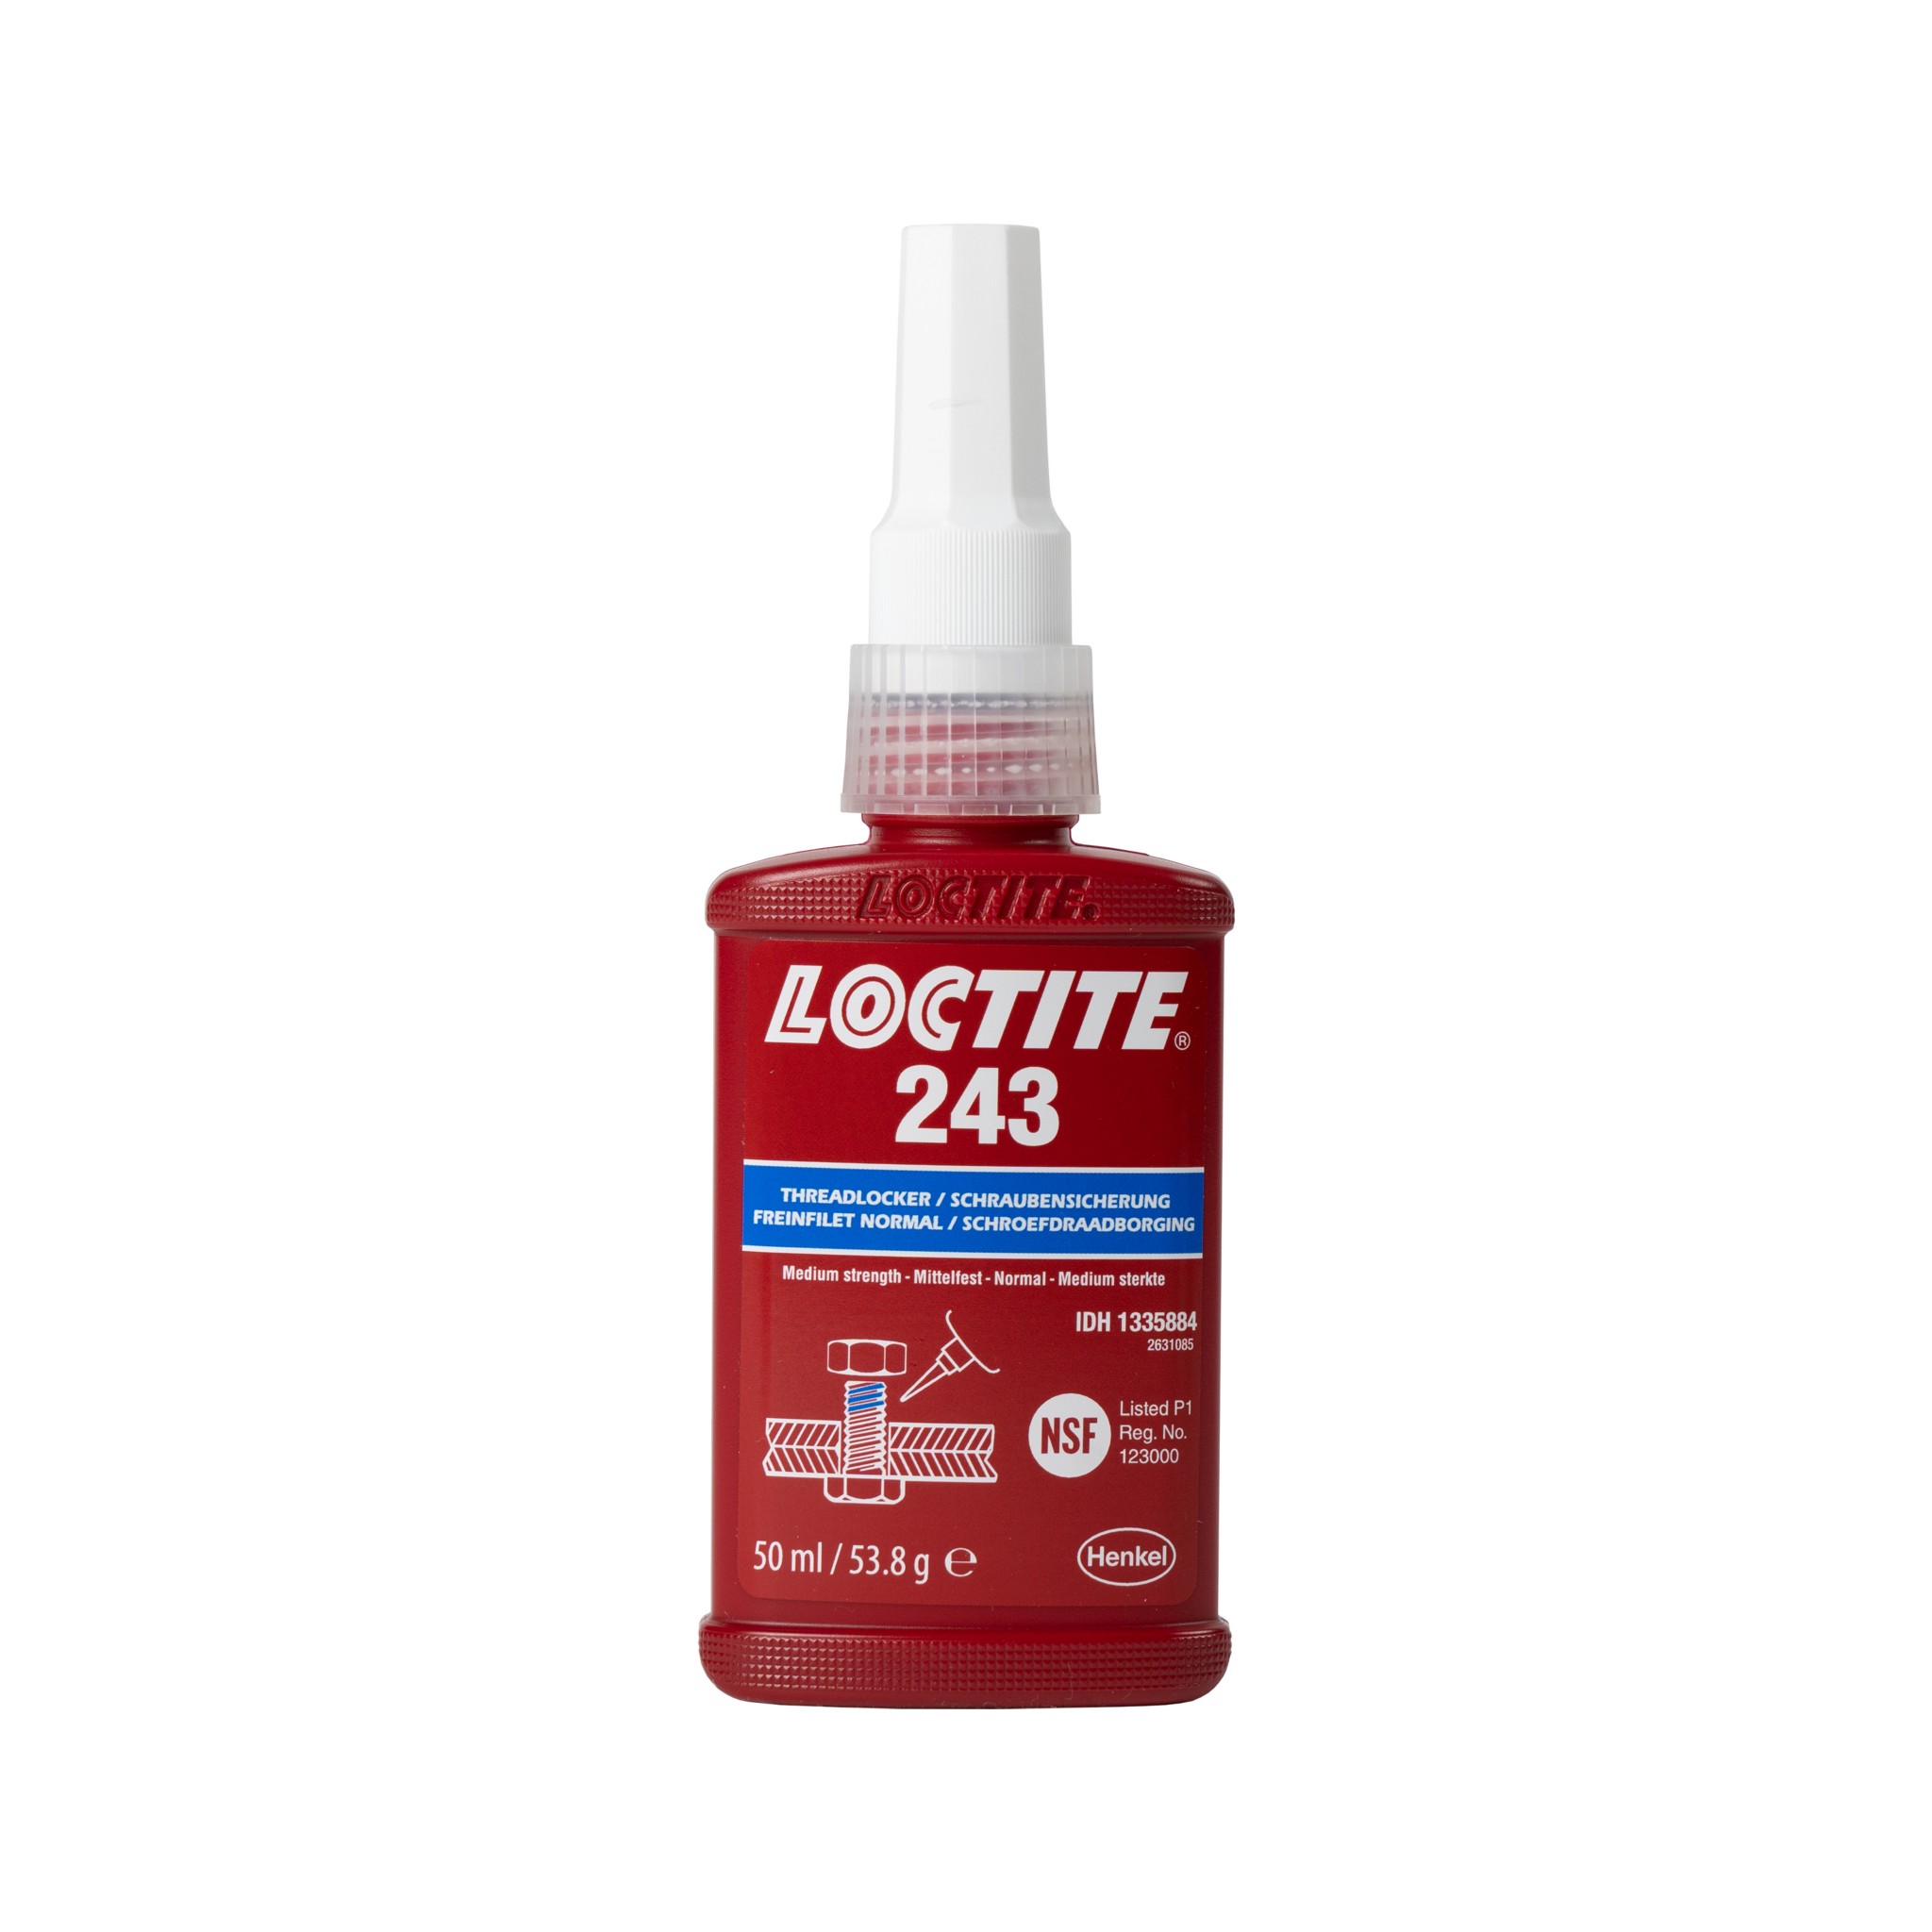 LOCTITE 243 - Threadlocker medium strength - Henkel Adhesives